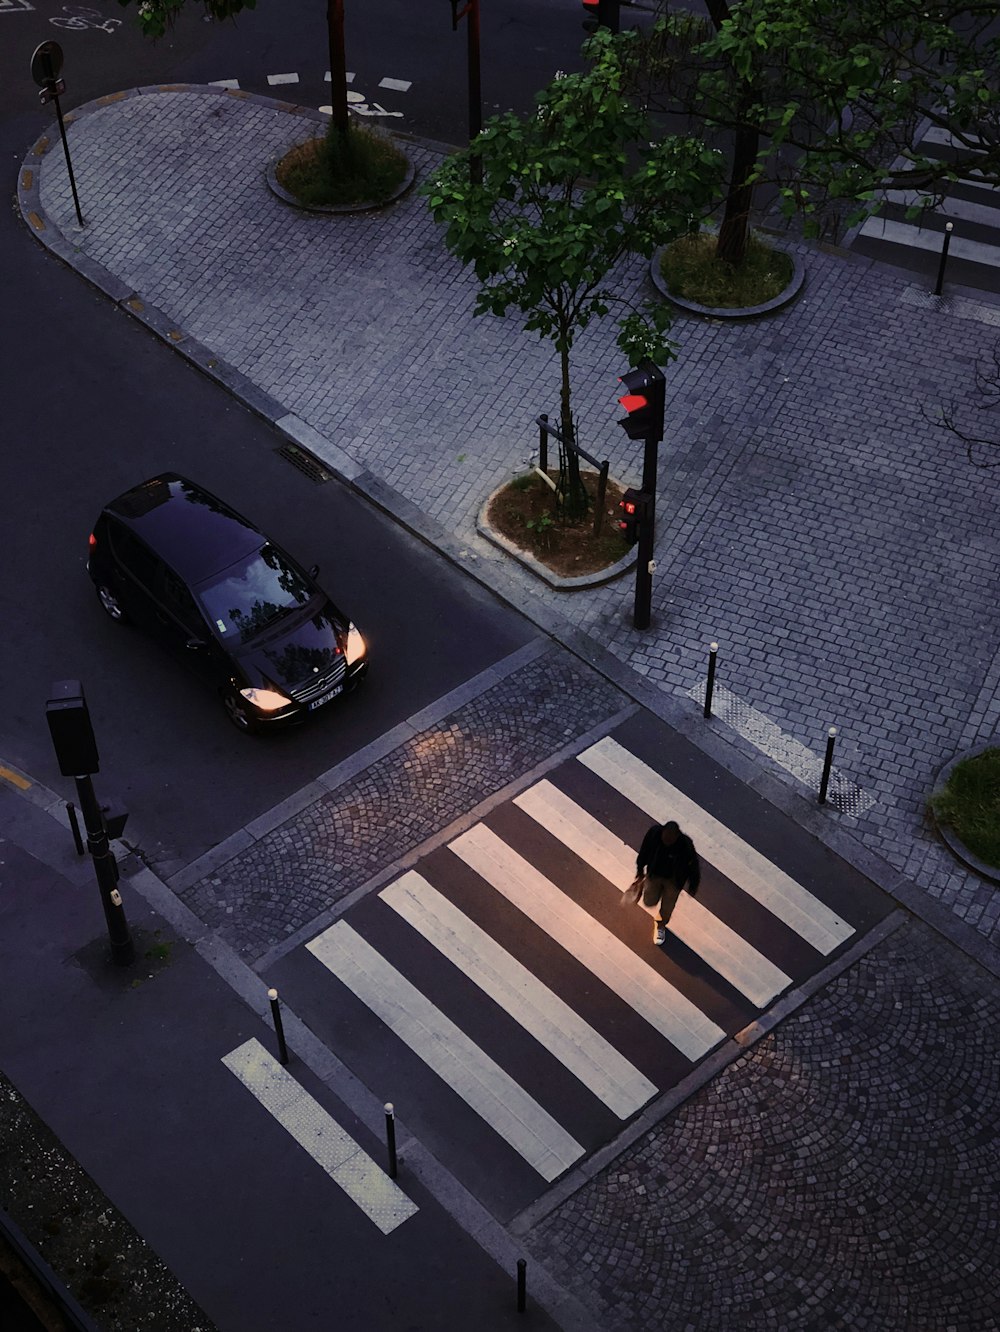 person crossing the pedestrian lane